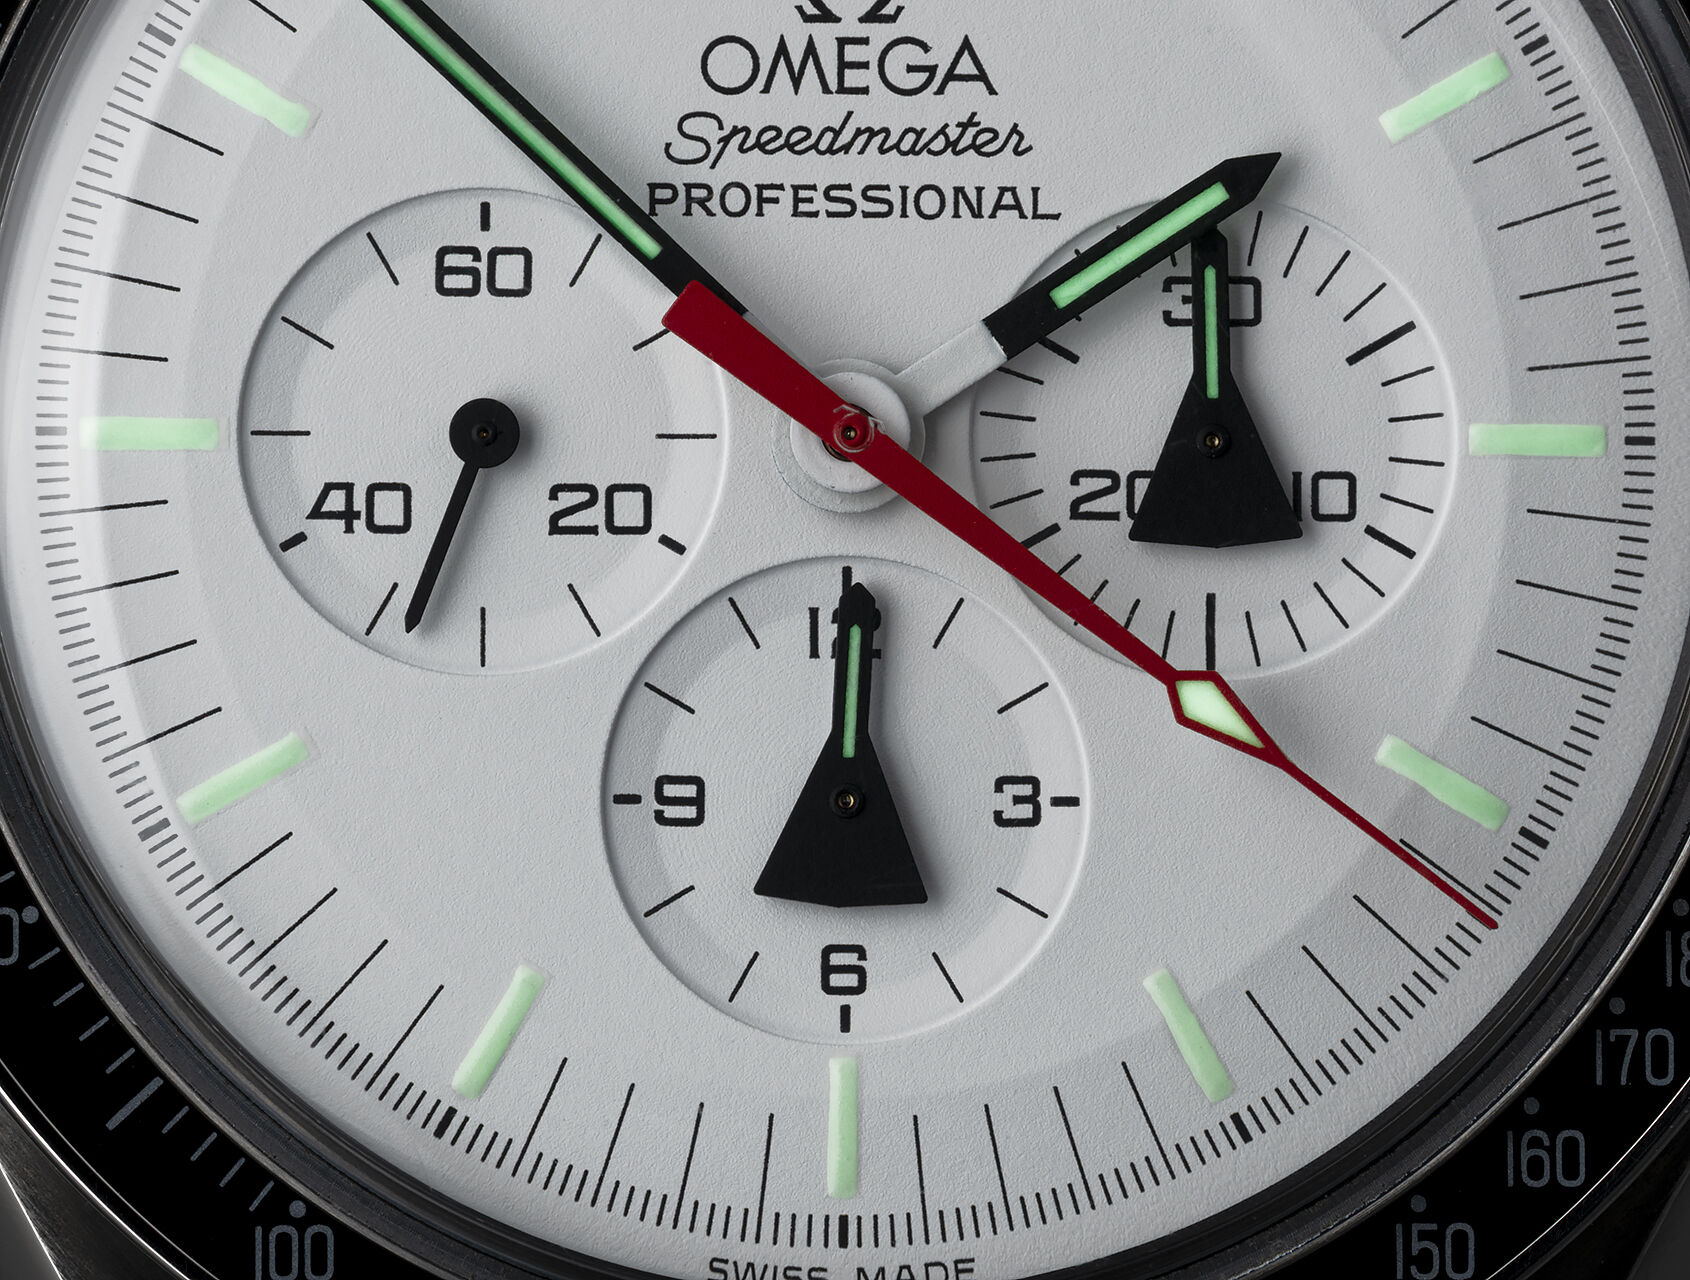 ref 31132423004001 | Alaska Project - Limited Edition | Omega Speedmaster Professional